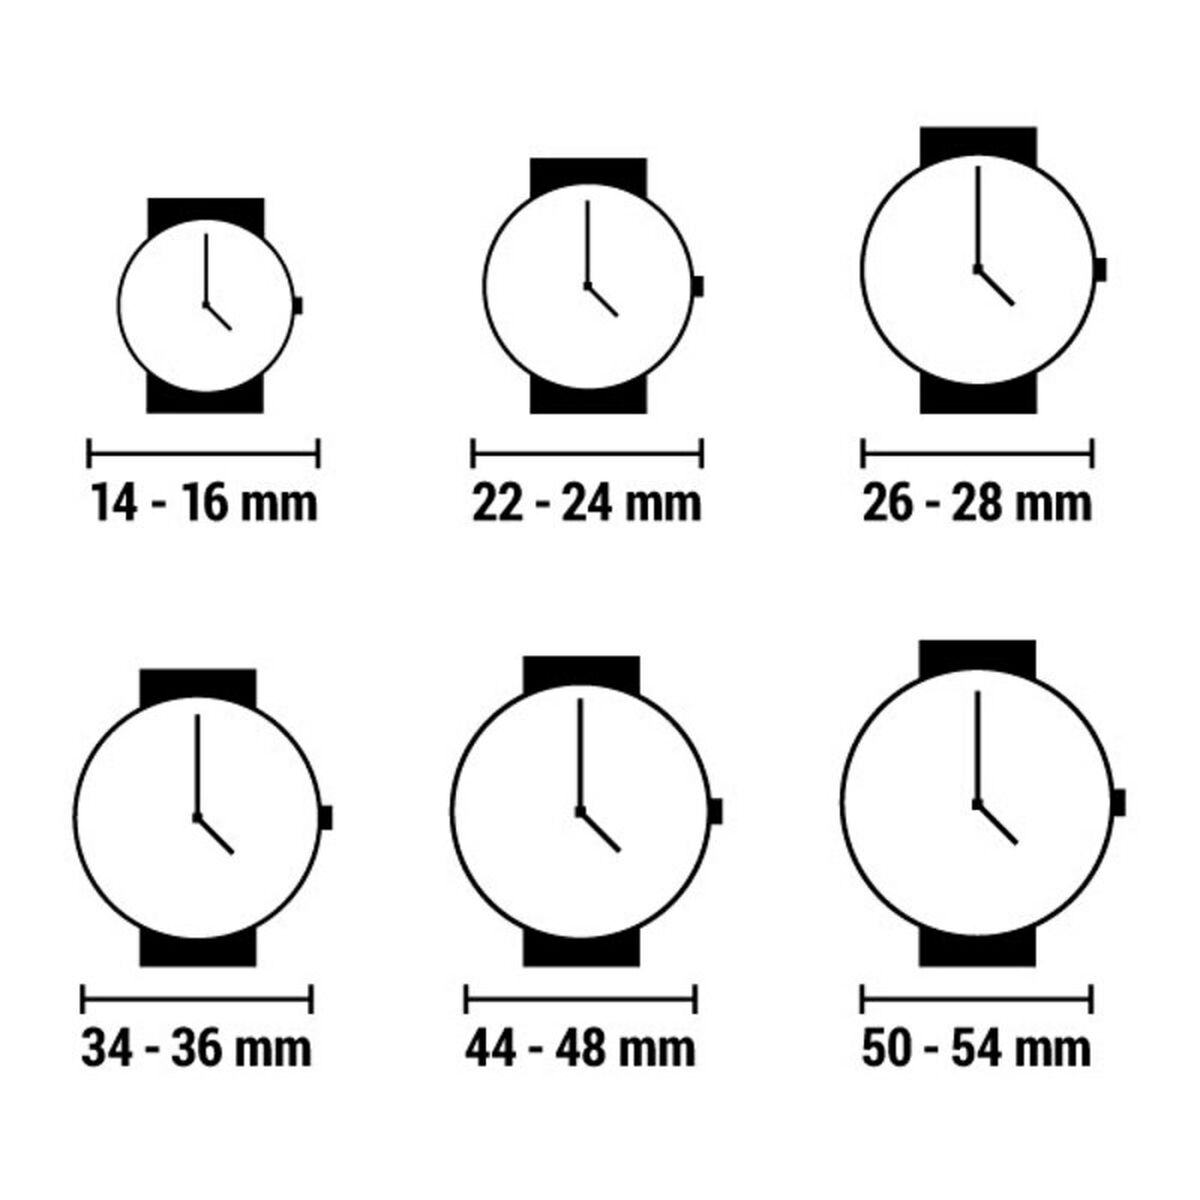 Horloge Heren Arabians HBA2260A (Ø 44 mm)